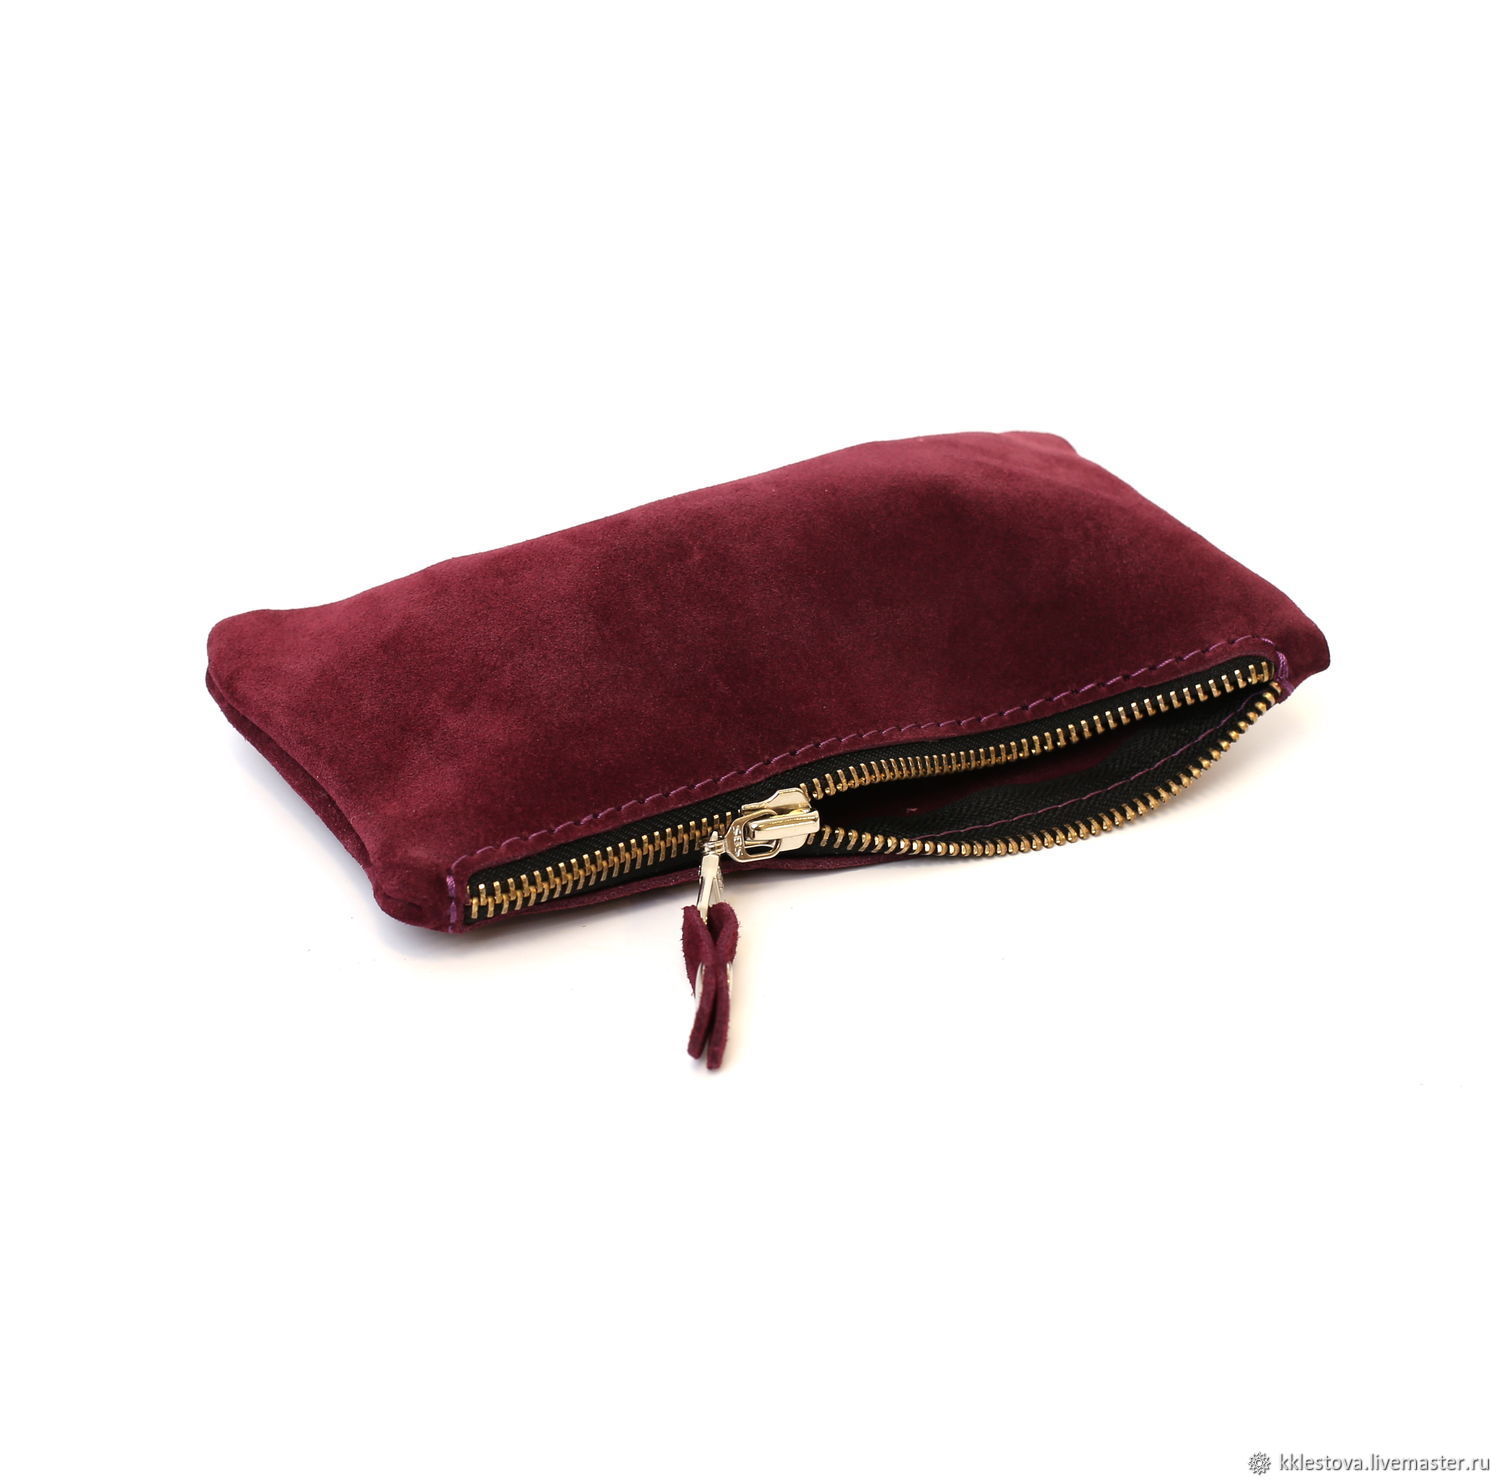 Burgundy suede Wallet Clutch Case organizer pencil Case cosmetic Bag, Wallets, Moscow,  Фото №1